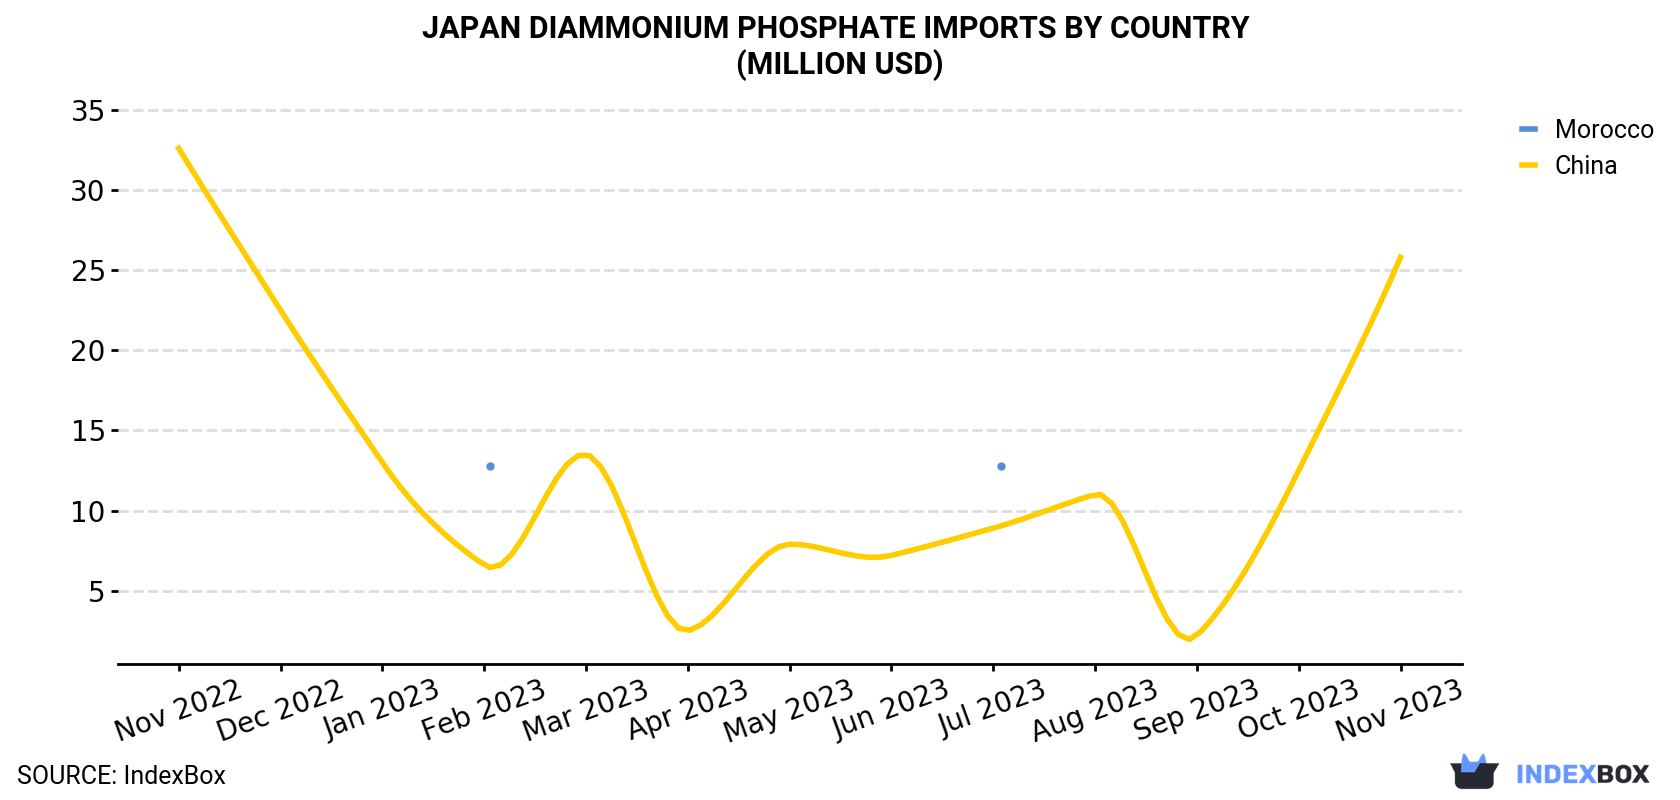 Japan Diammonium Phosphate Imports By Country (Million USD)